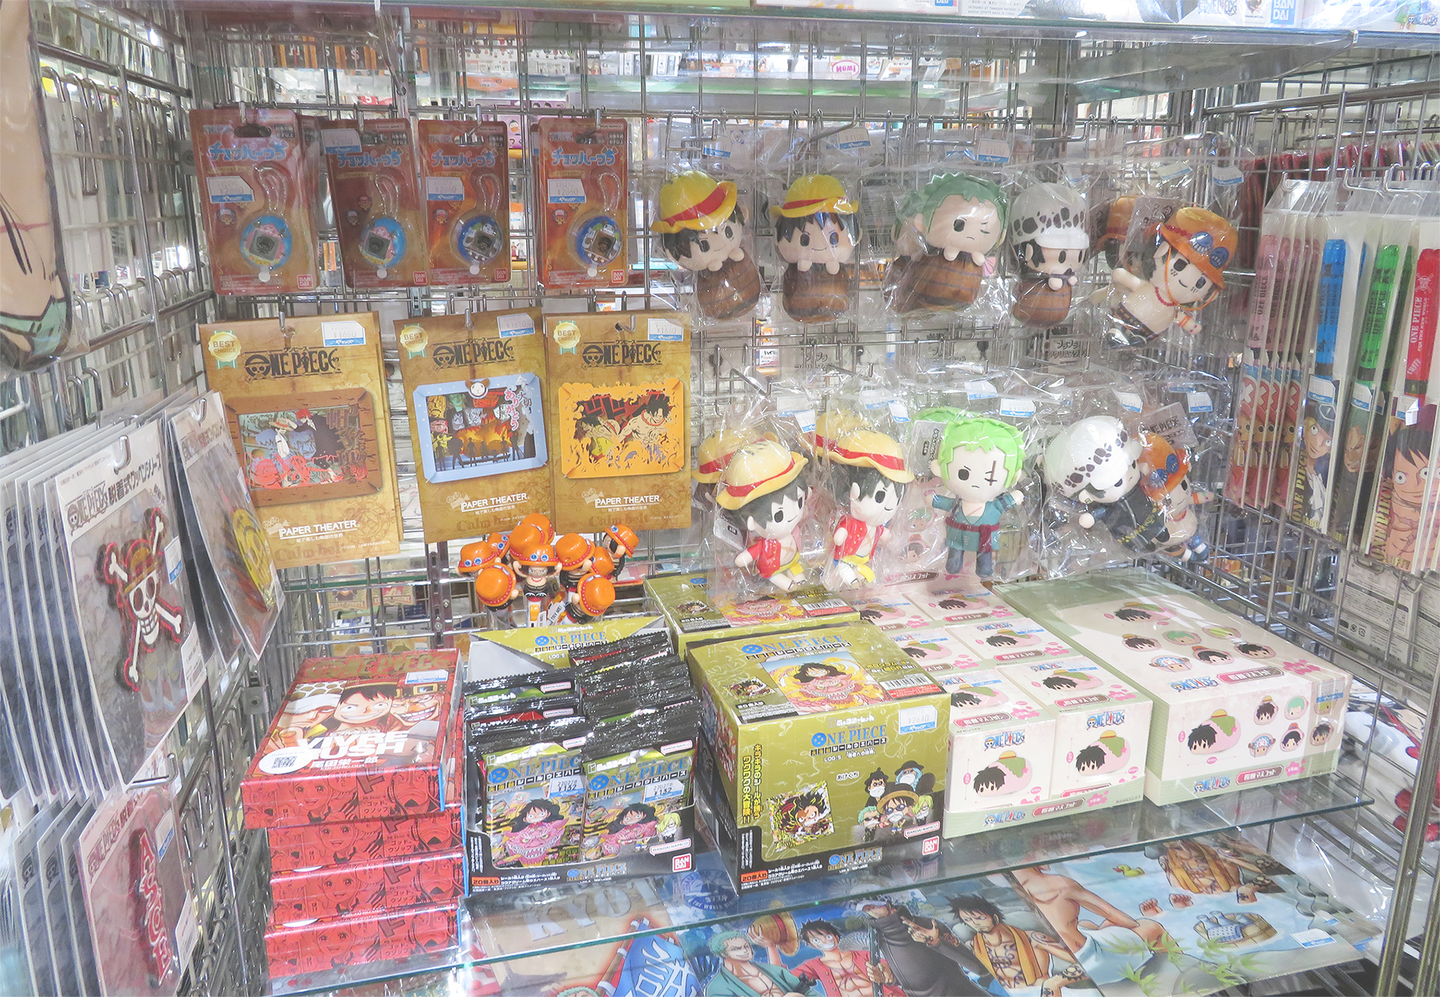 Images of ONE PIECE merchandise sold at YAMASHIROYA1